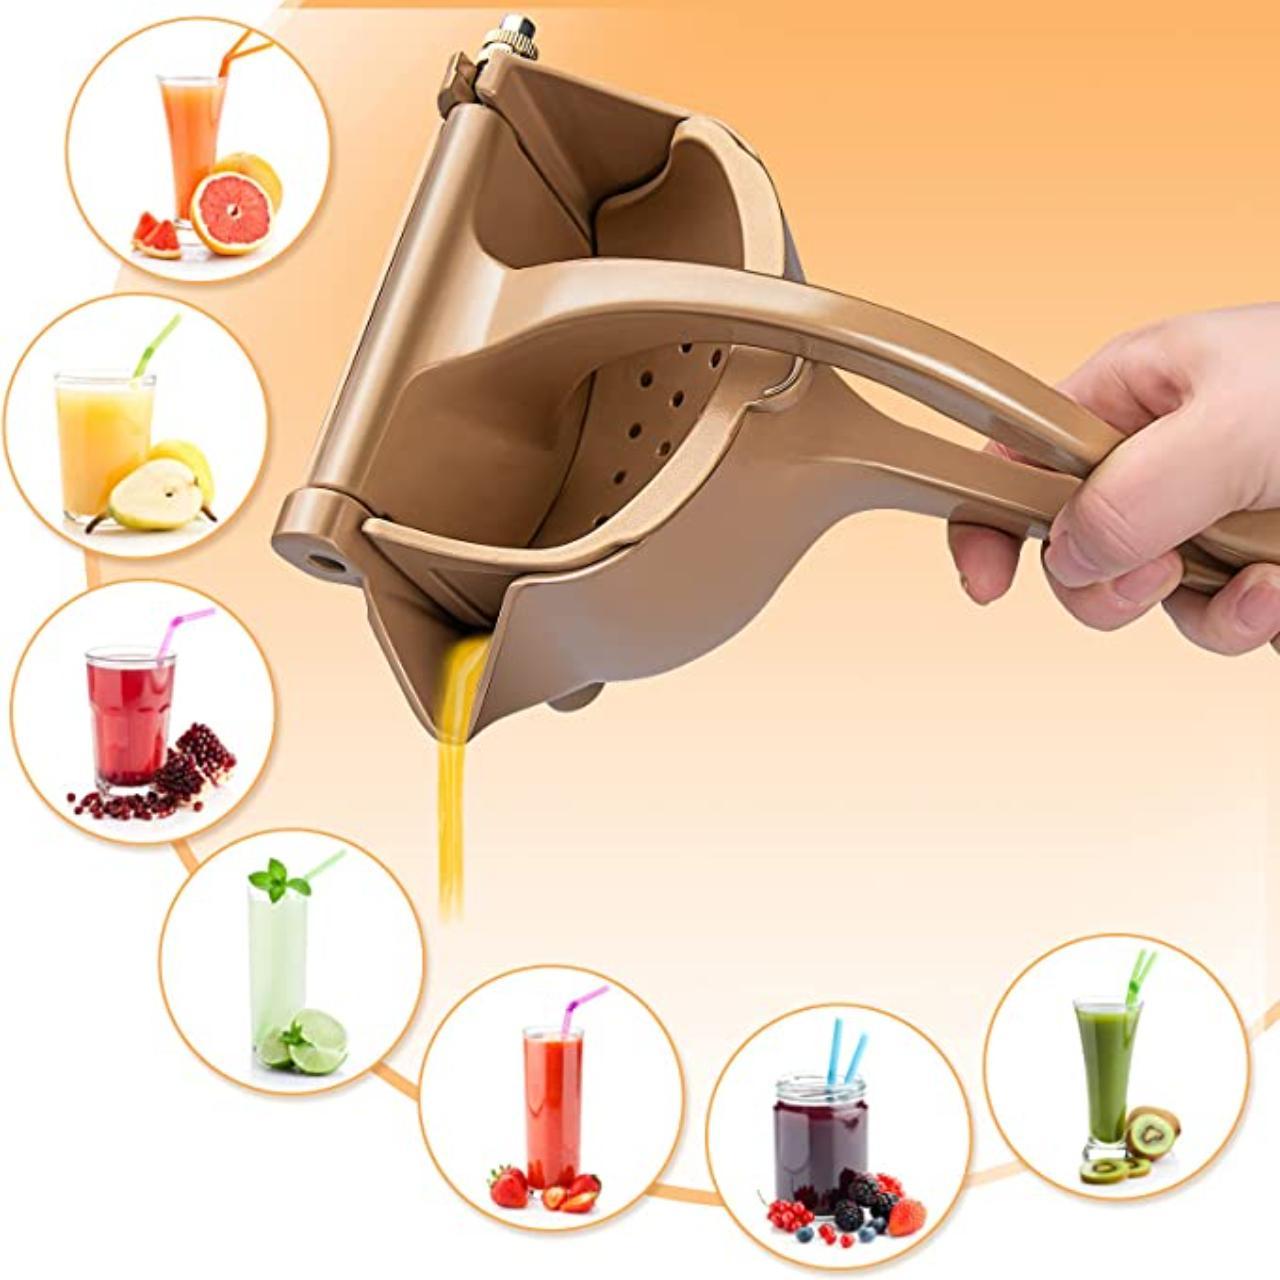 Product Image 2 - Automoness Manual Fruit Juicer, Hand